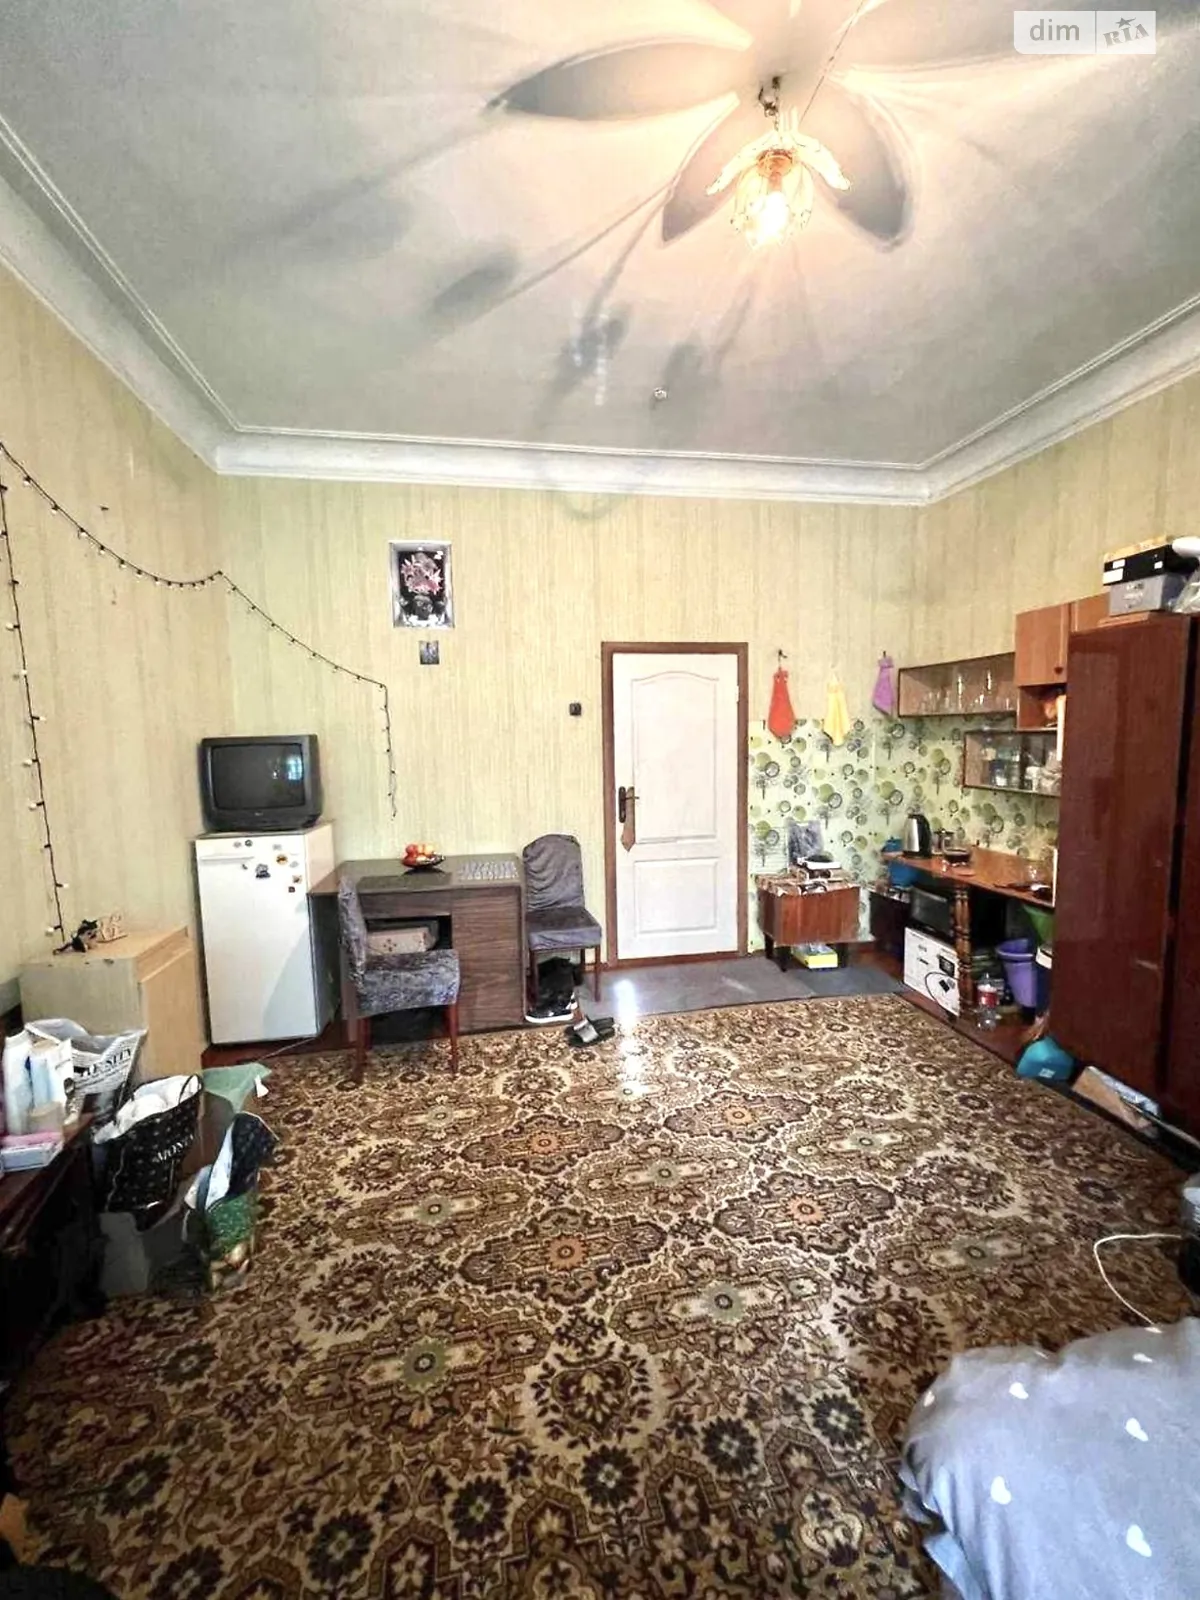 Продается комната 35 кв. м в Запорожье, цена: 5999 $ - фото 1